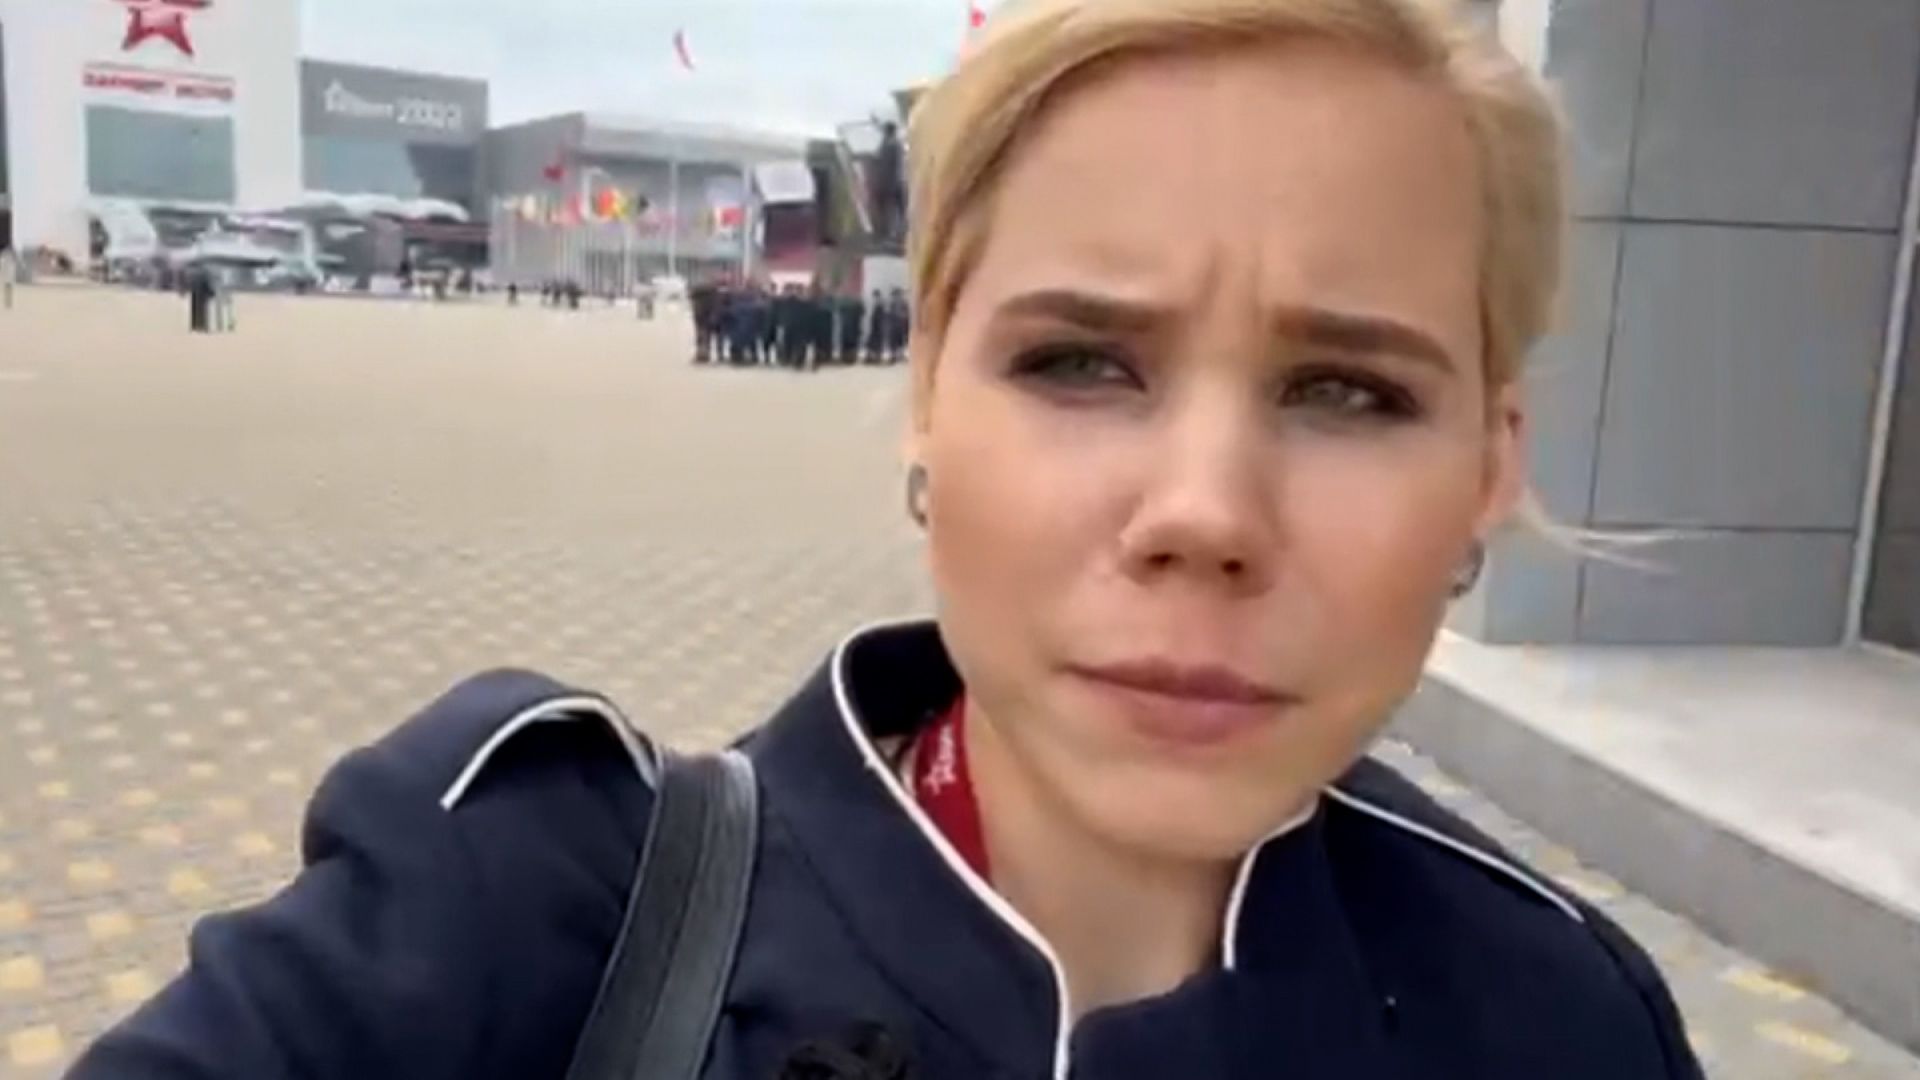 Darya Dugina video: Russian media says explosion killed daughter of Putin ally | CNN